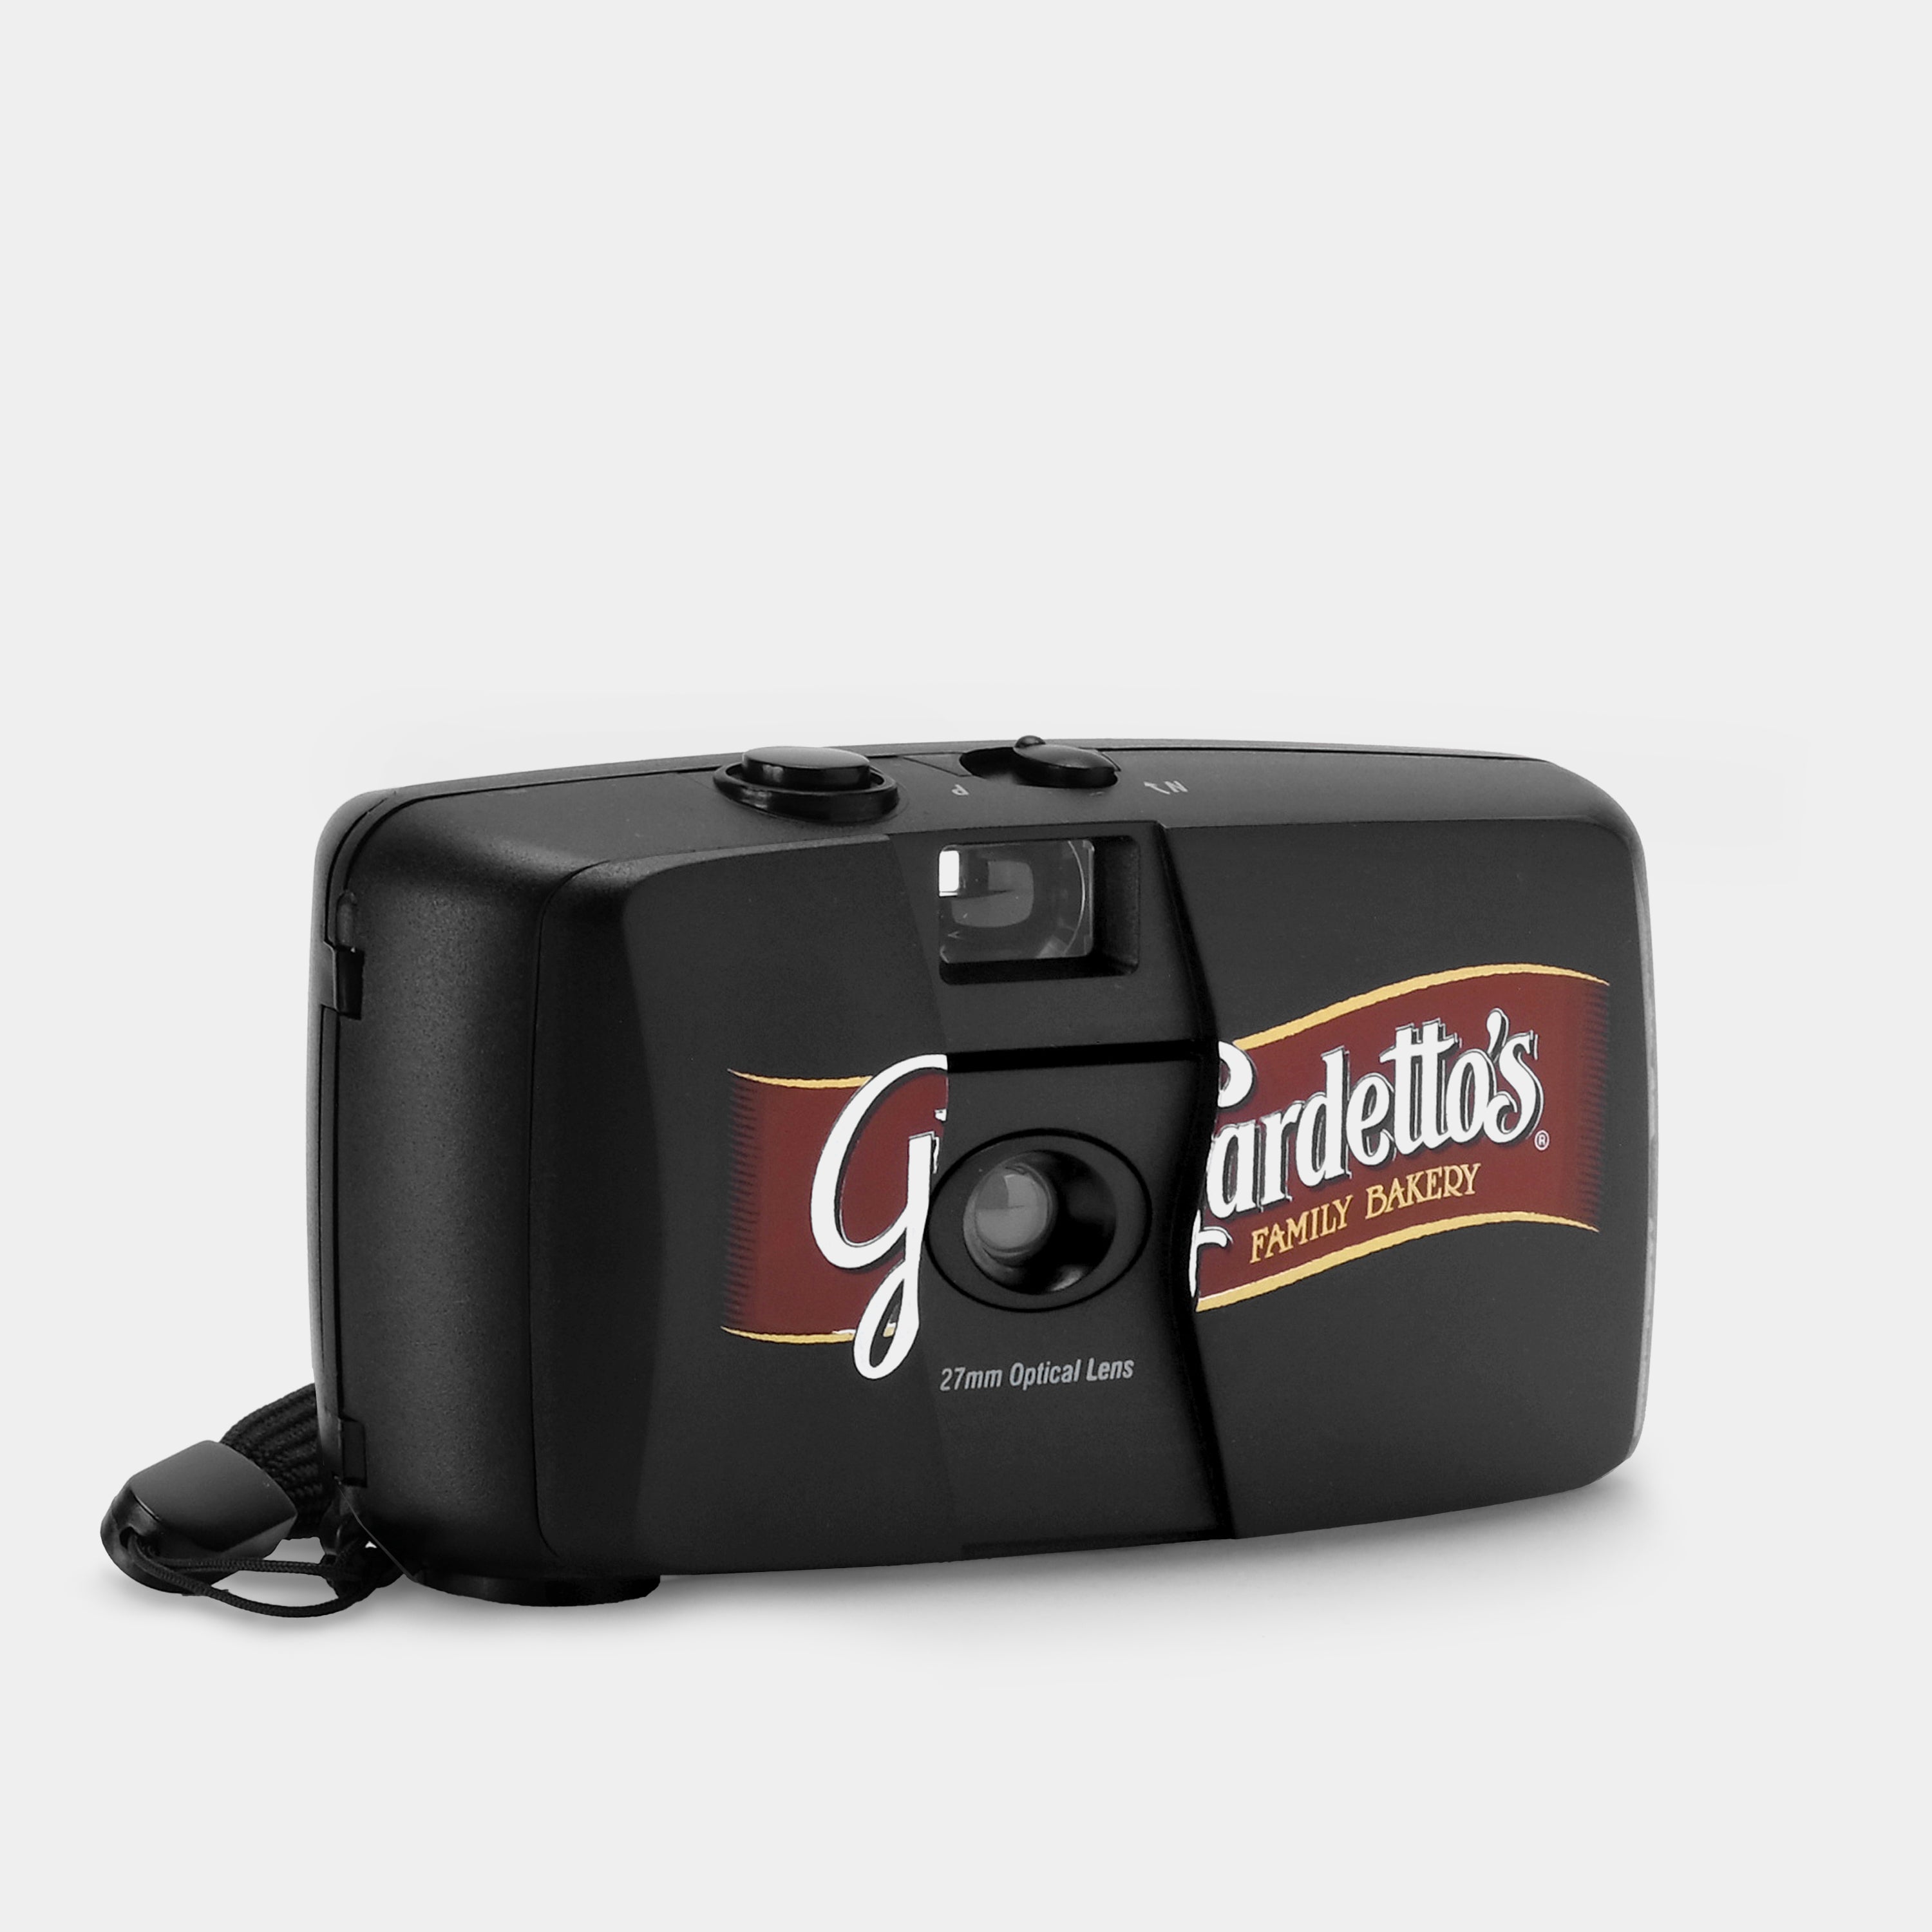 Gardetto's Family Bakery 35mm Point and Shoot Film Camera